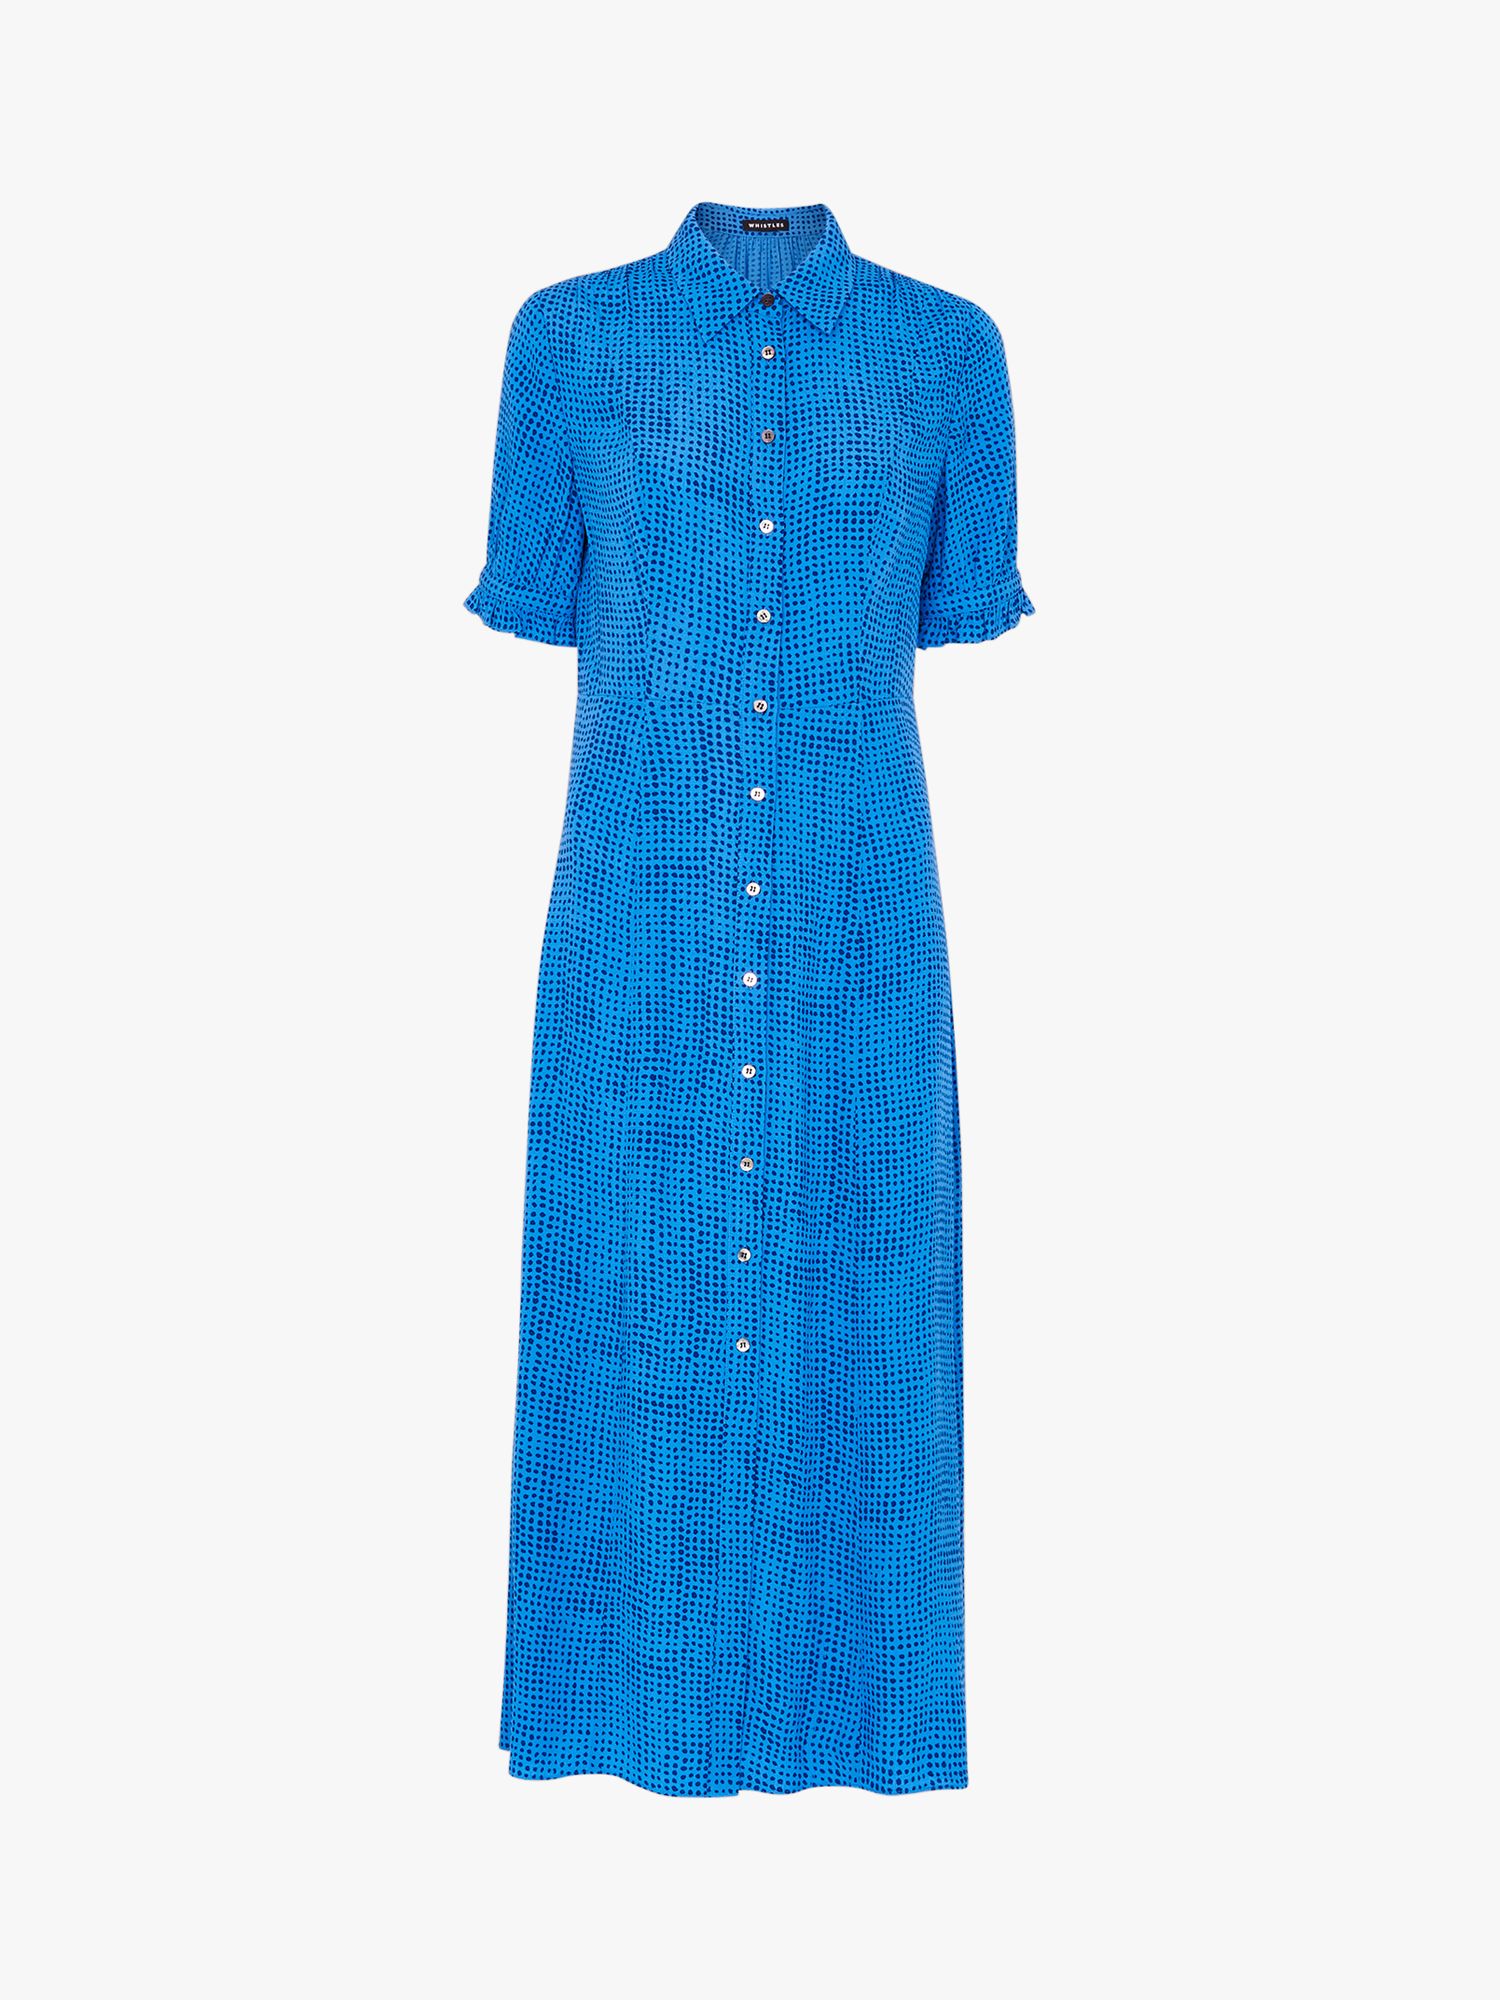 Whistles Peri Spotted Check Print Midi Shirt Dress, Blue/Multi